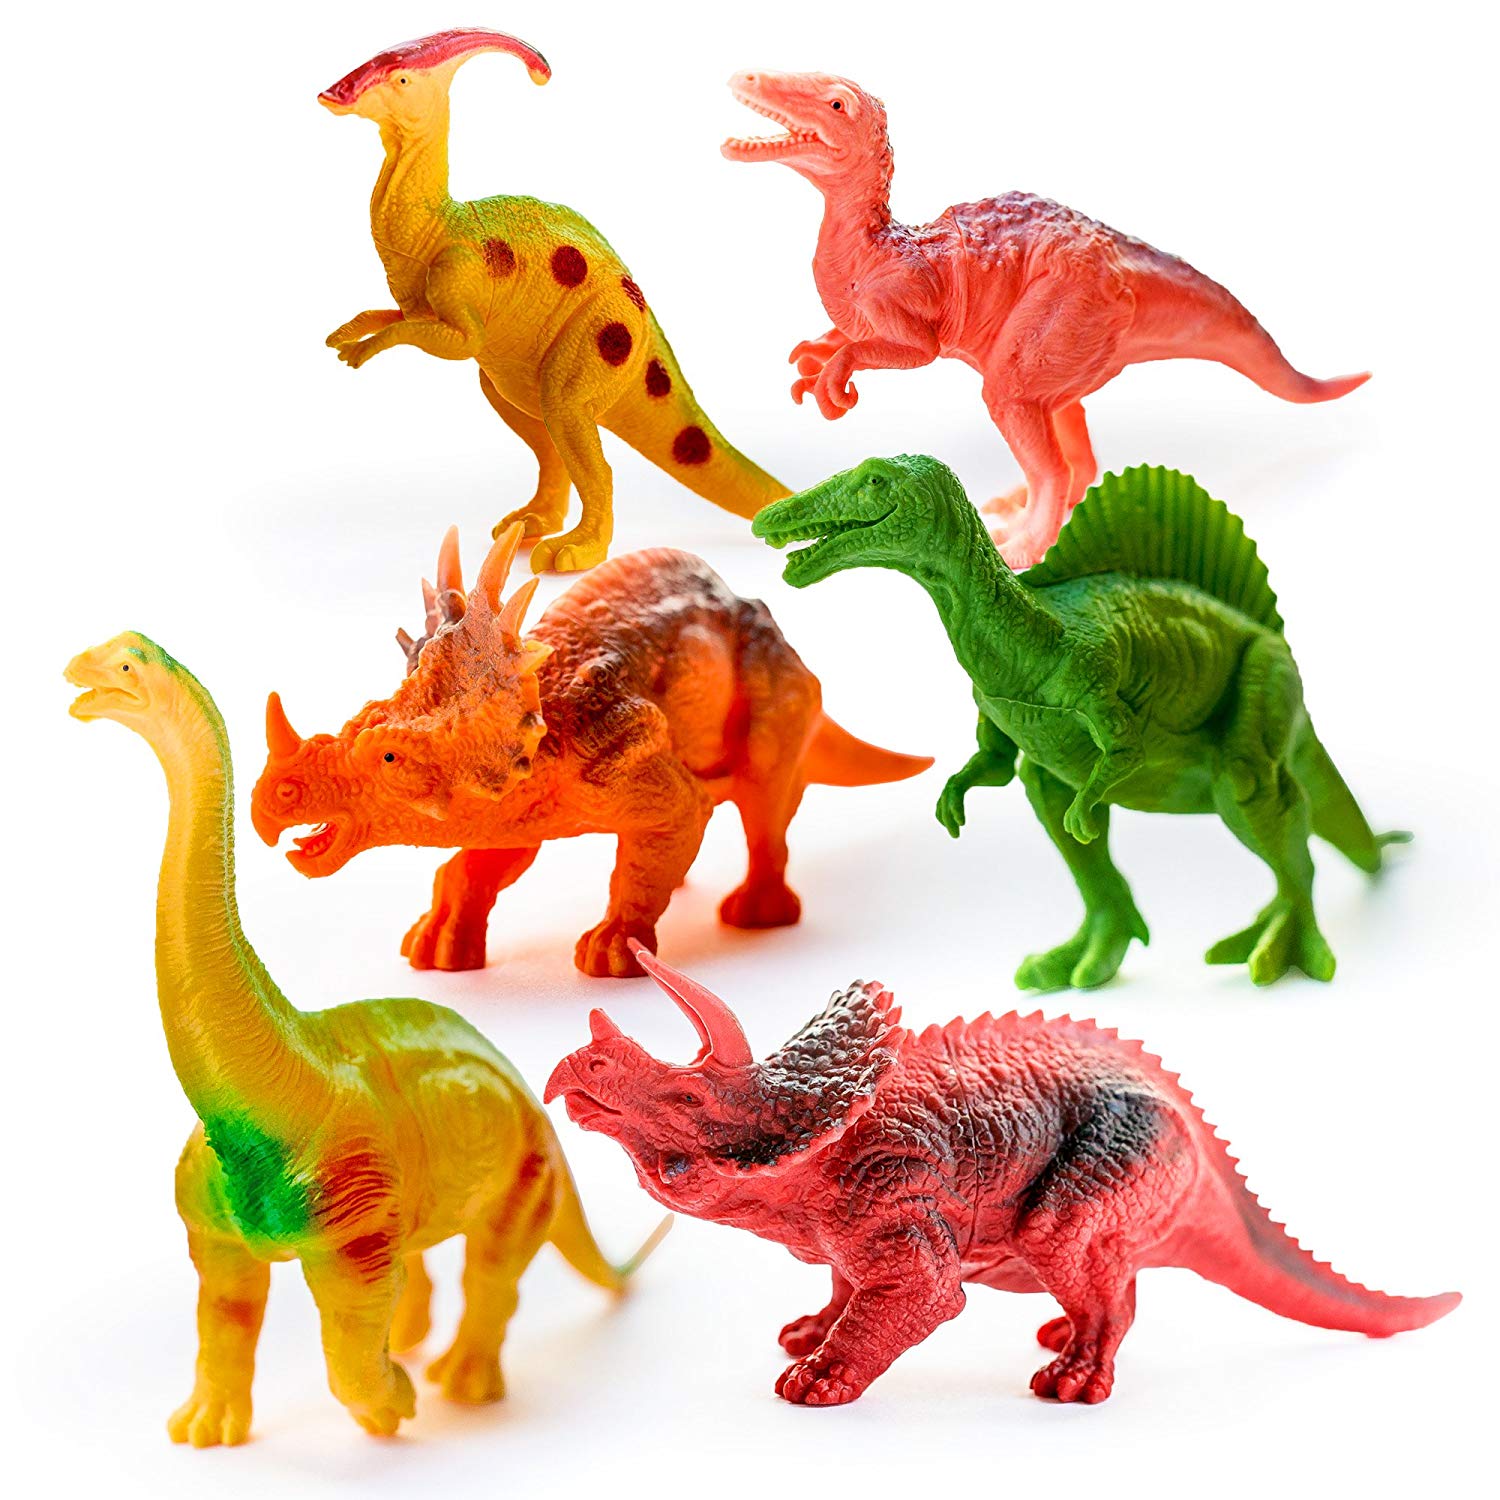 Buy Kids Imaginative Dinosaur Toy Figures | Small & Large Plastic ...